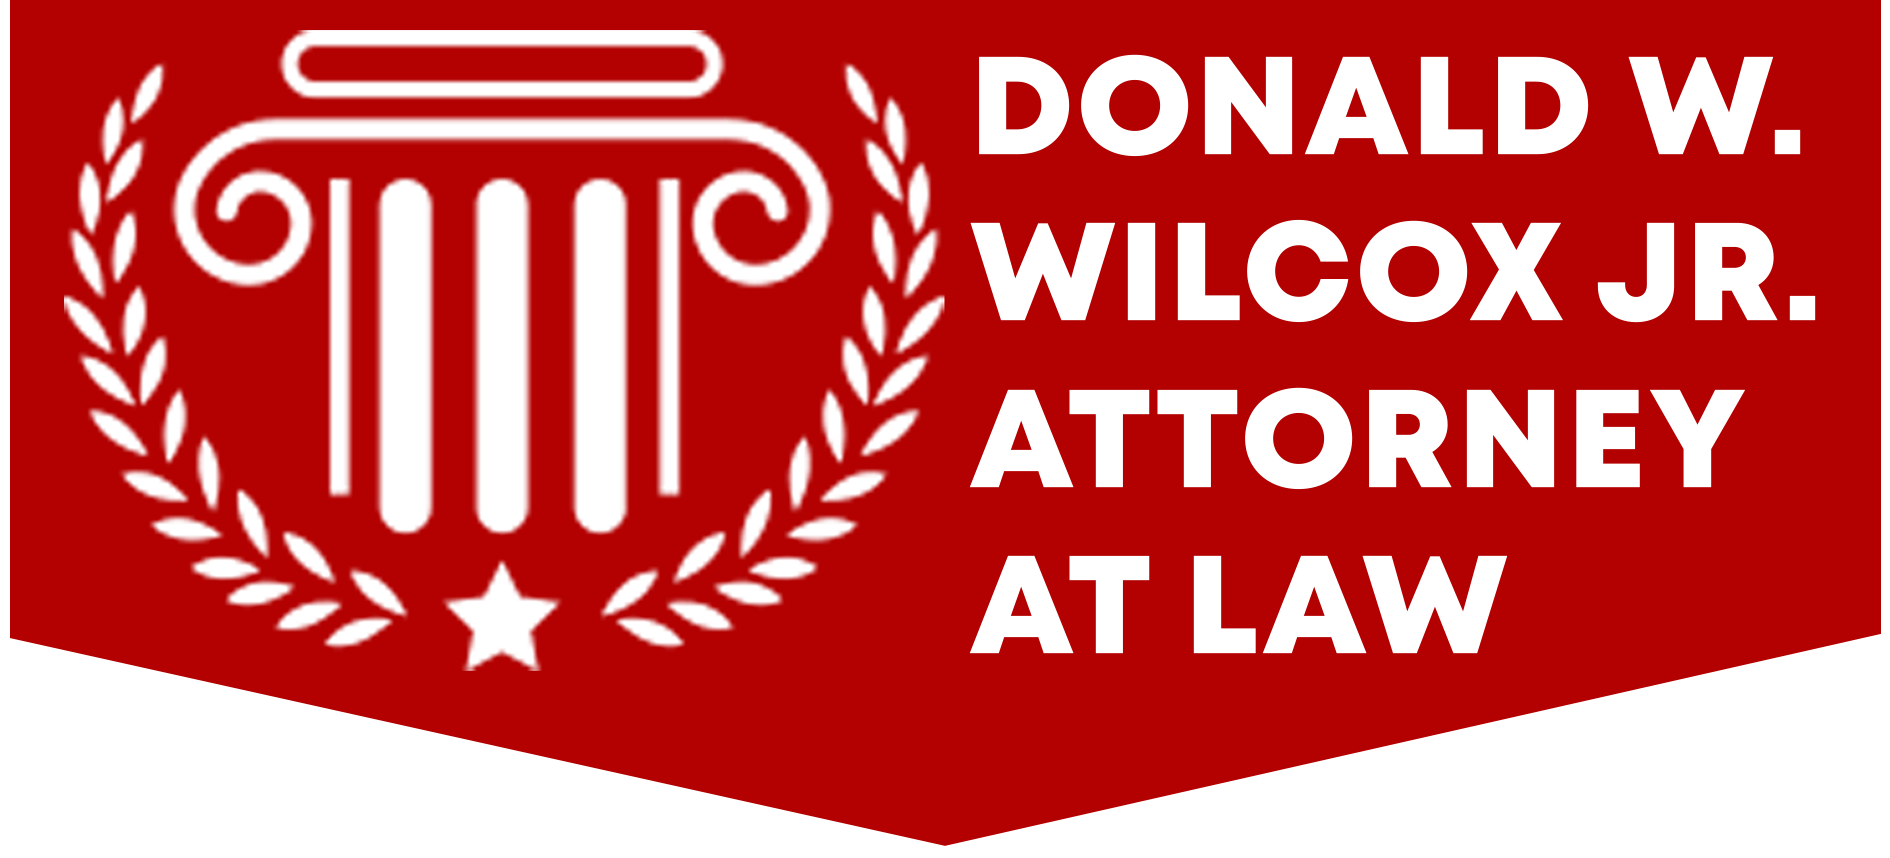 Donald W. Wilcox Jr. Attorney at Law Logo